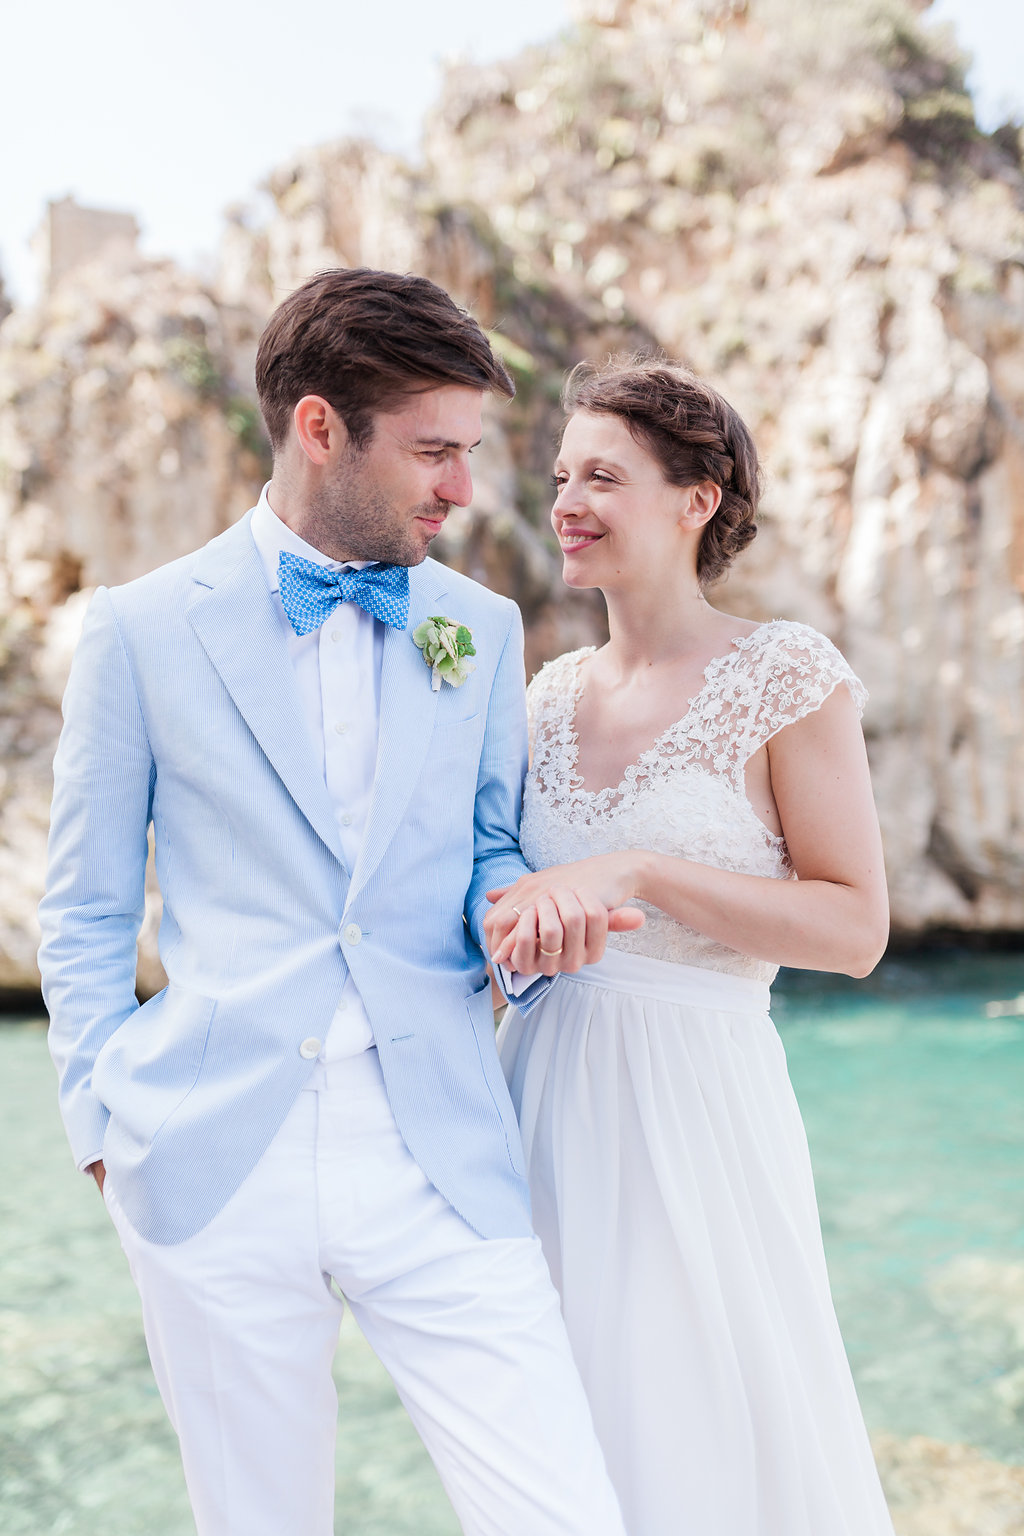 Mariella & Philip || A Sicilian Destination Wedding